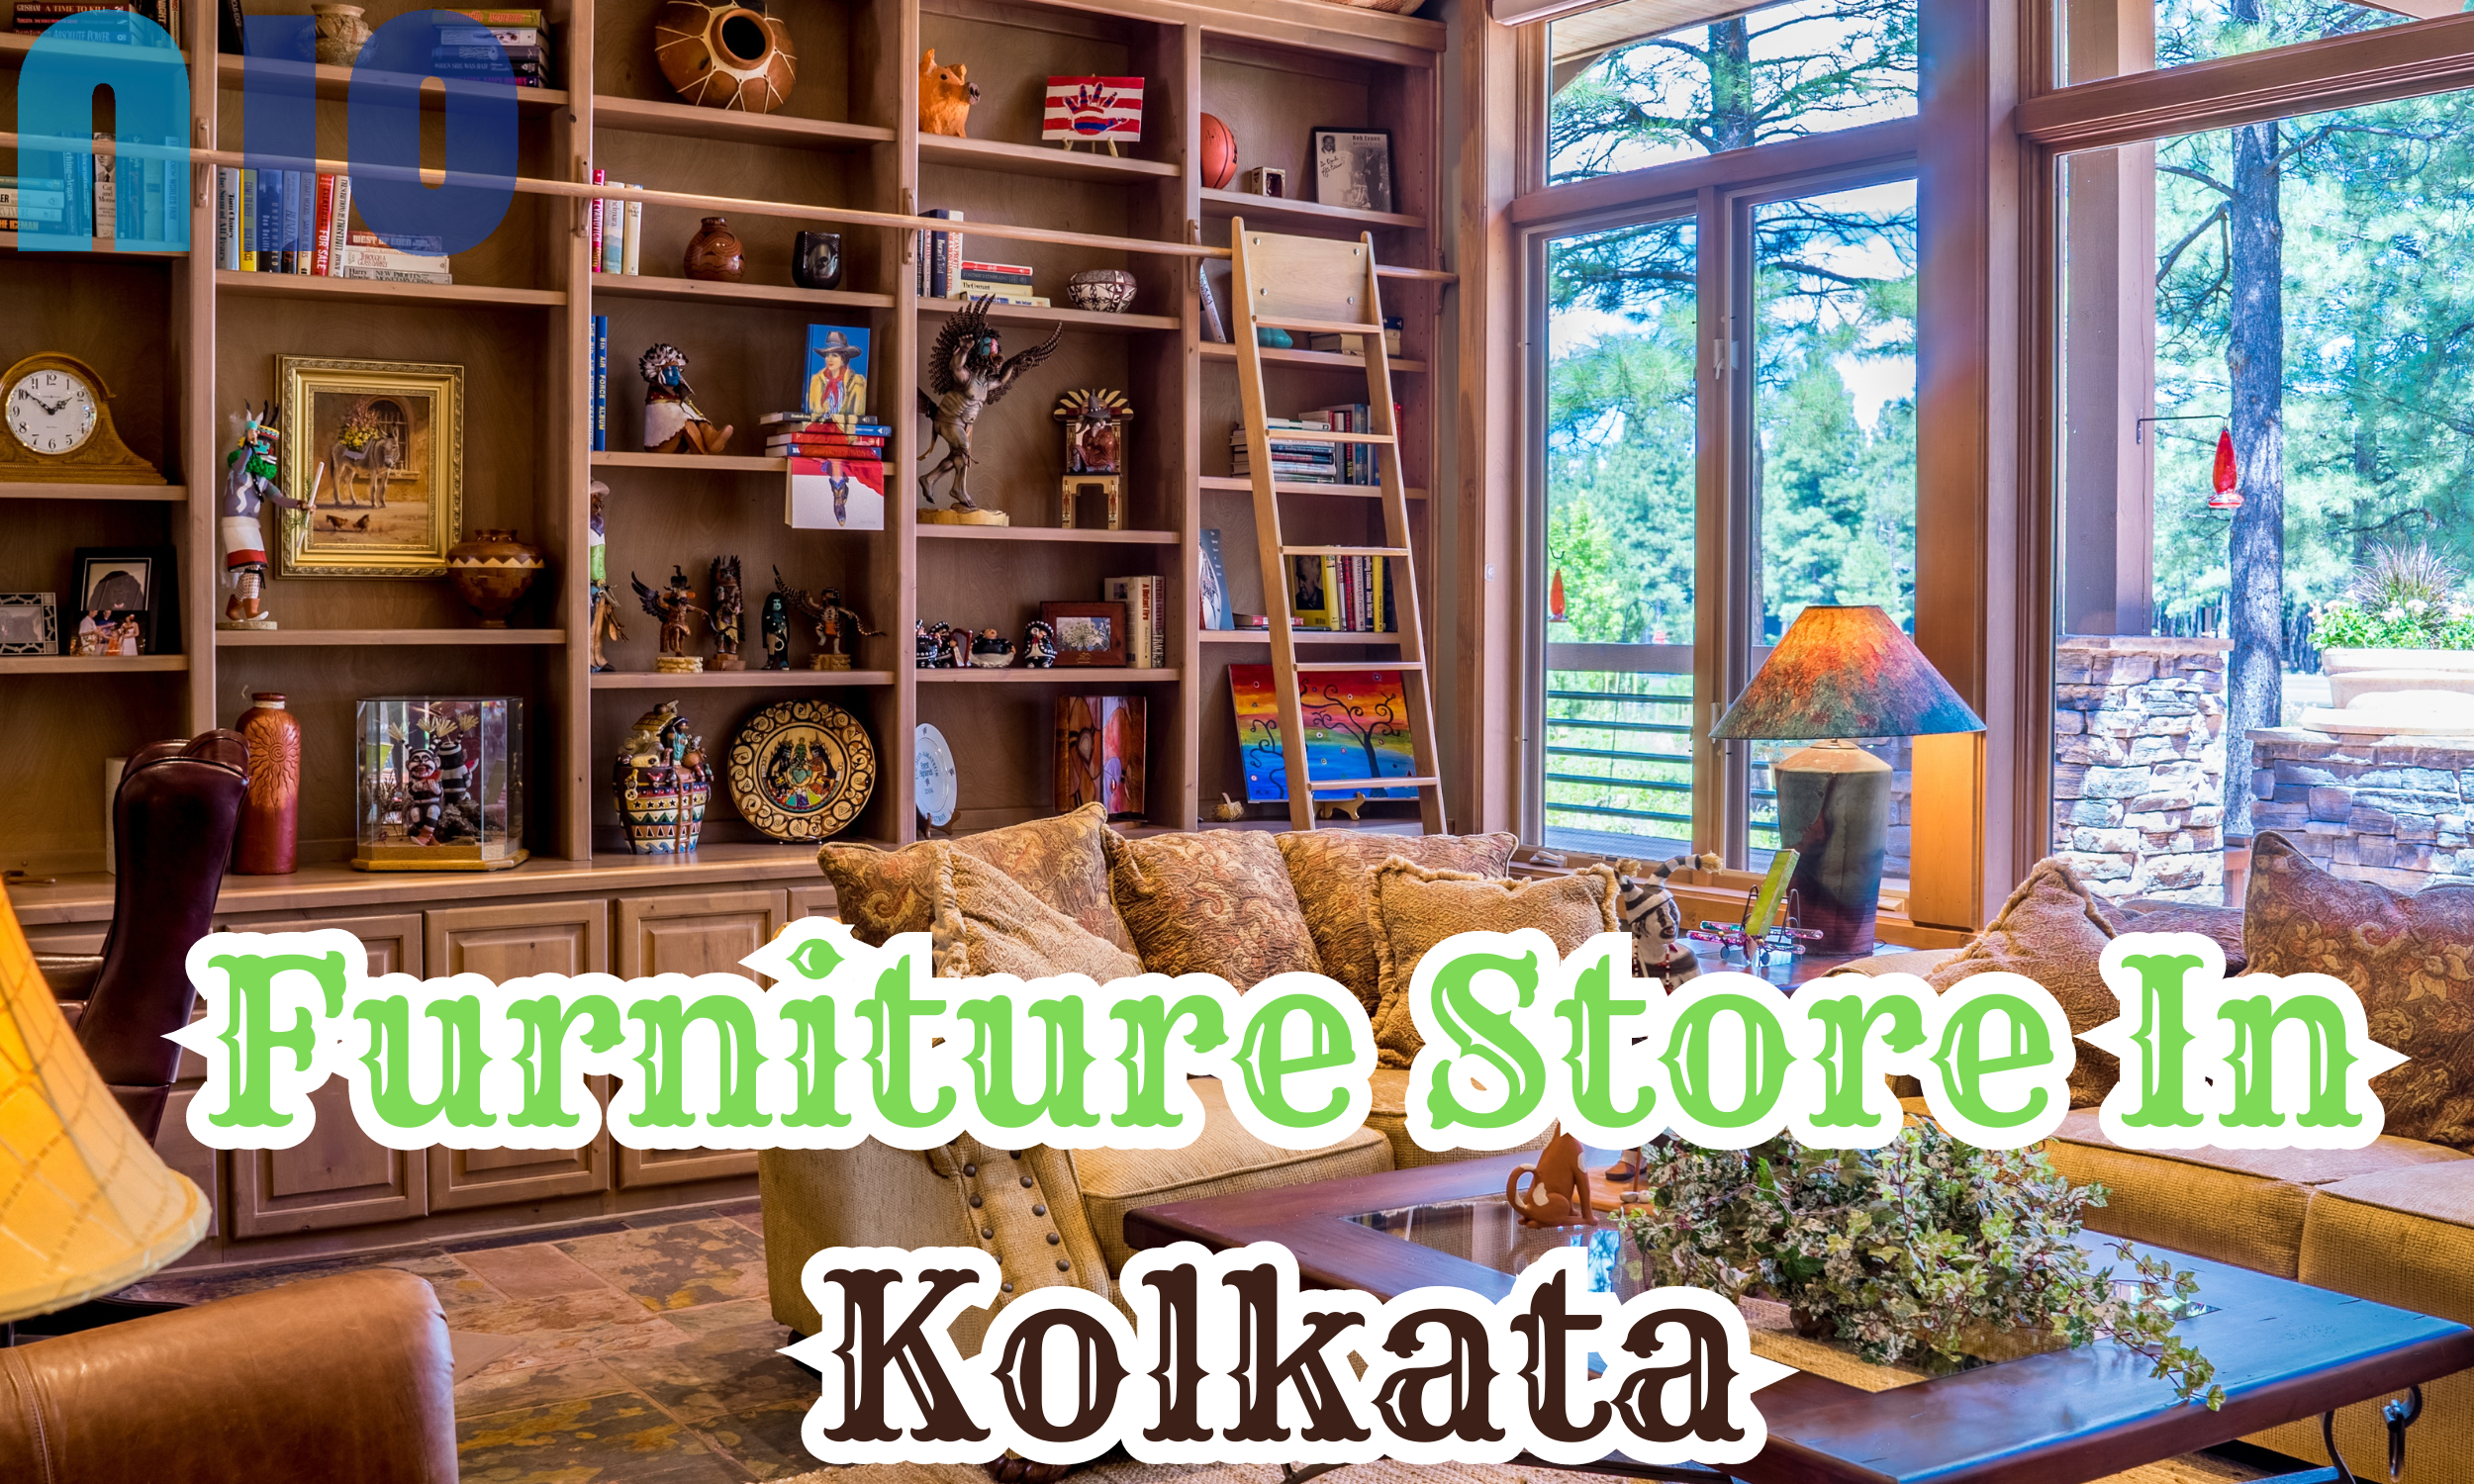 Furniture Store In Kolkata